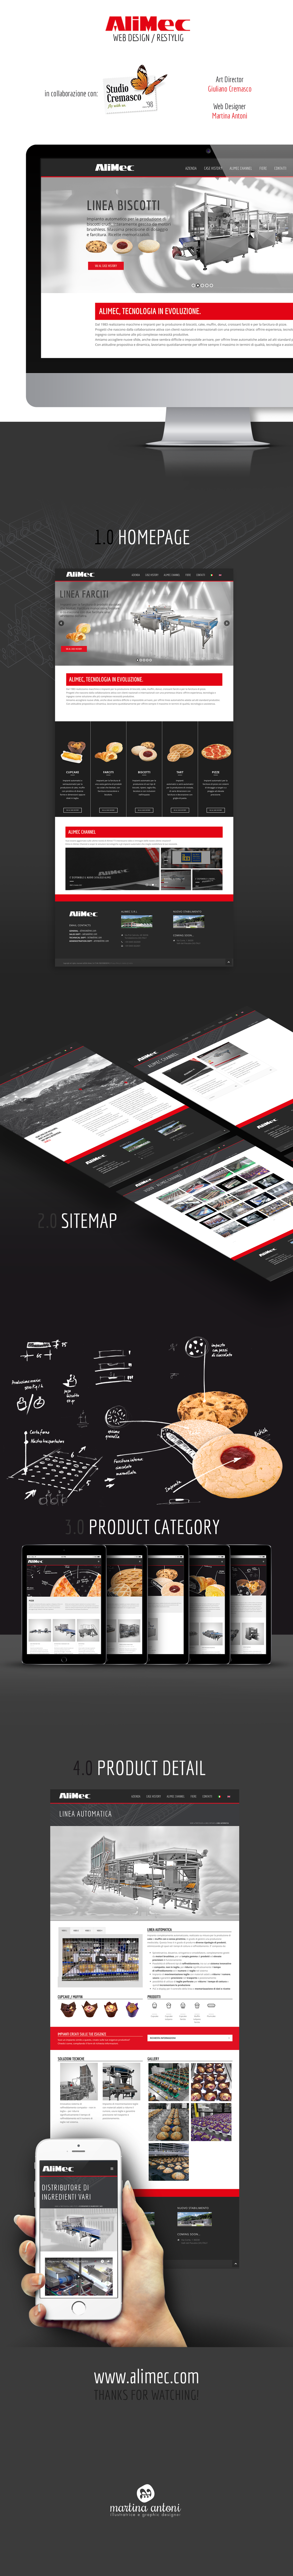 Web design alimec site company products